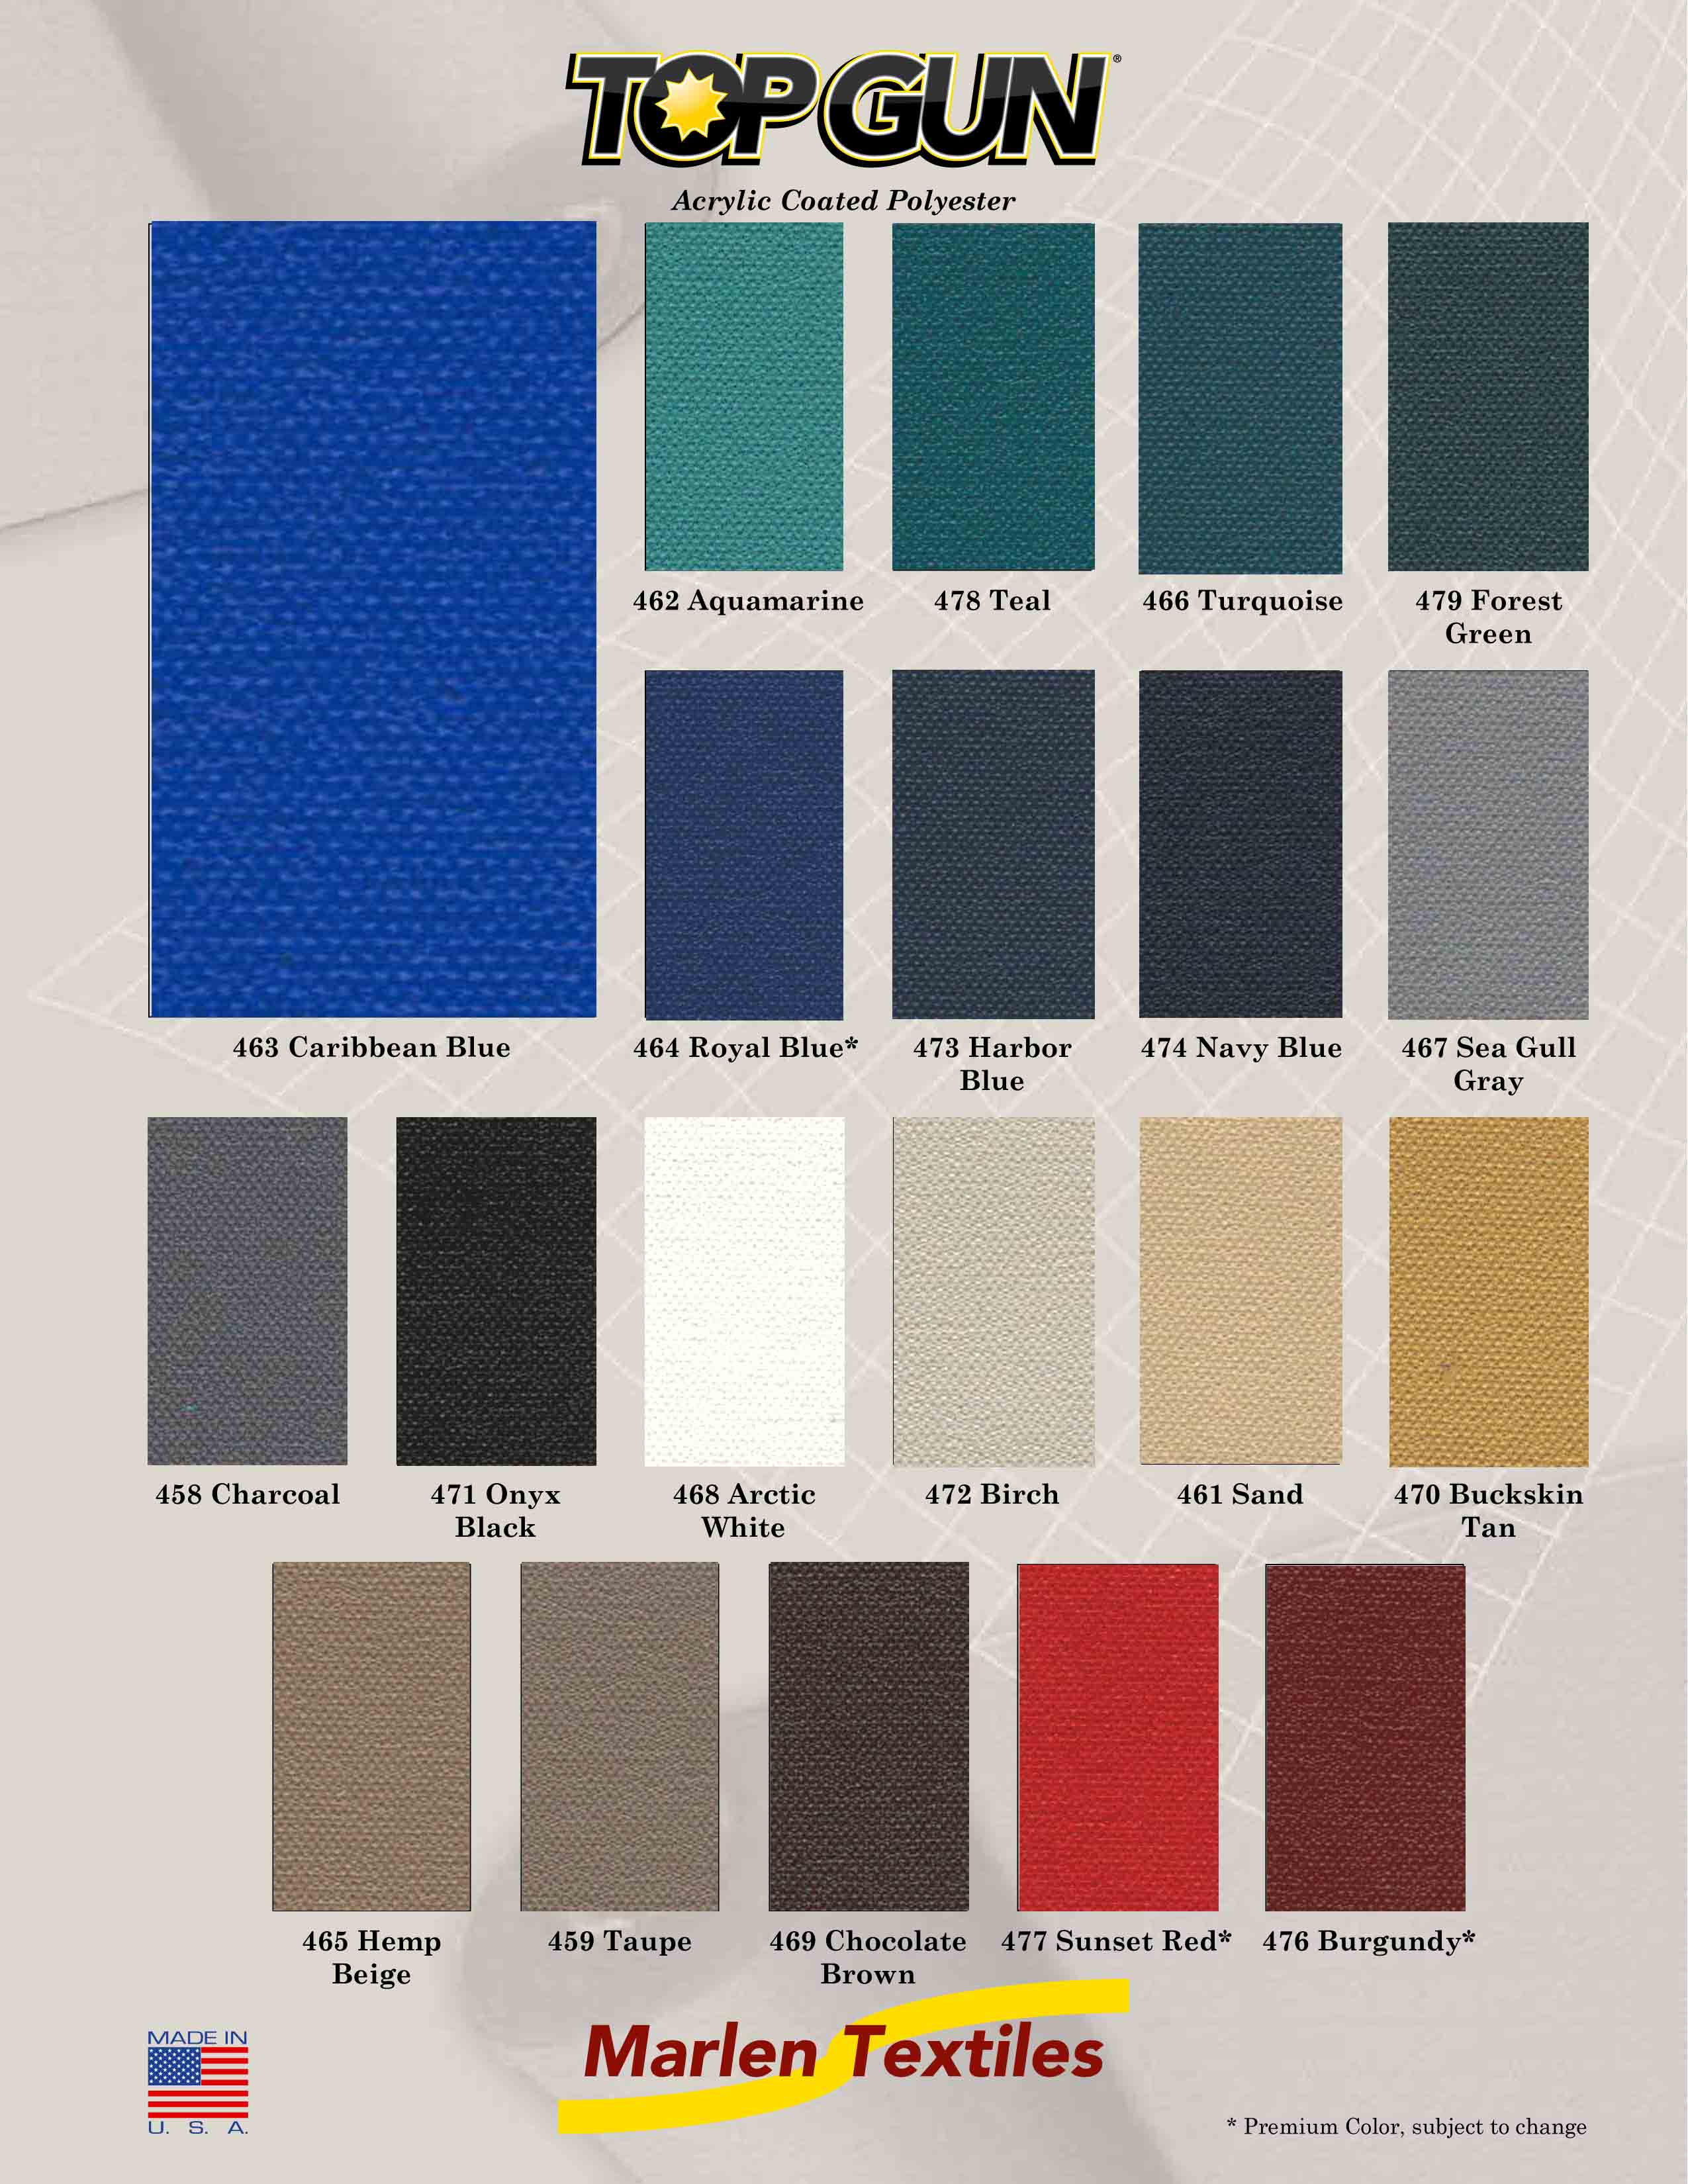 Marlen Textiles  Top Gun Acrylic Coated Polyester Fabric Colors